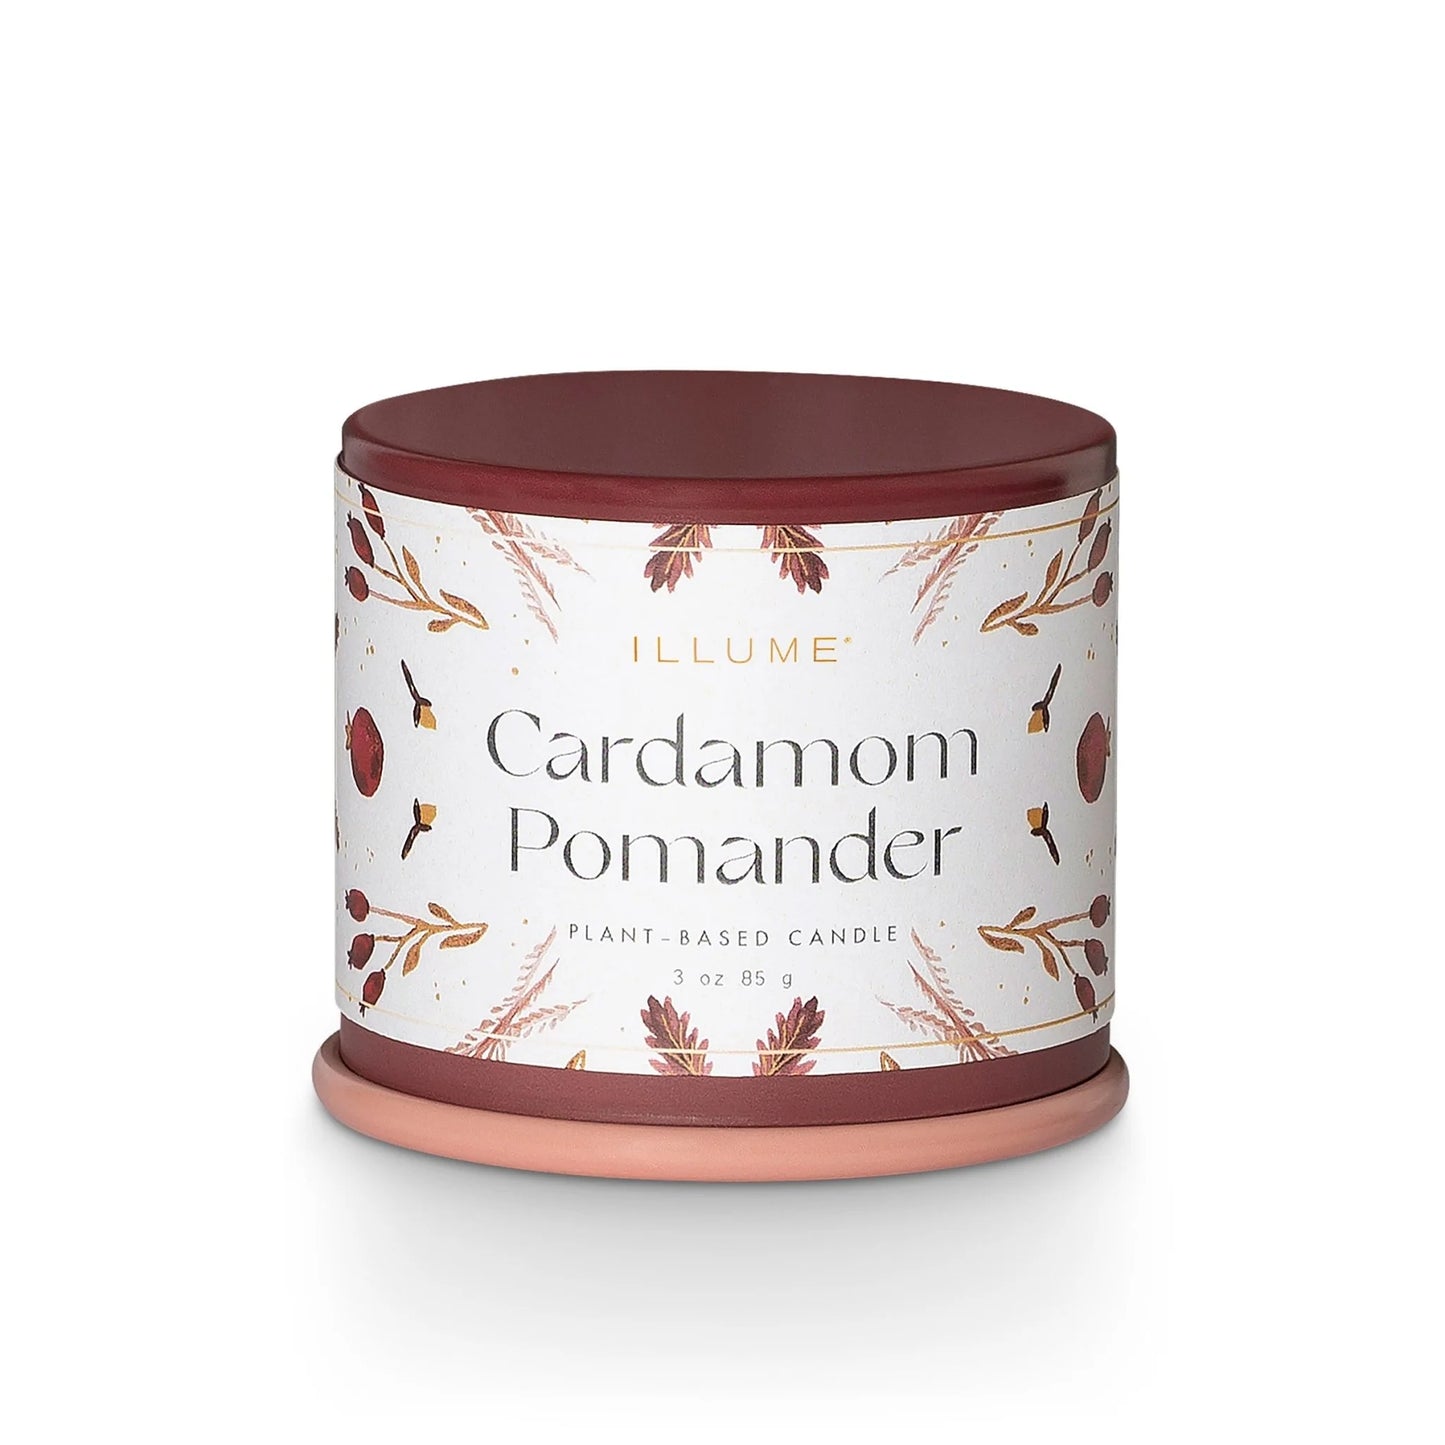 Cardamom Pomander Candle 3 oz